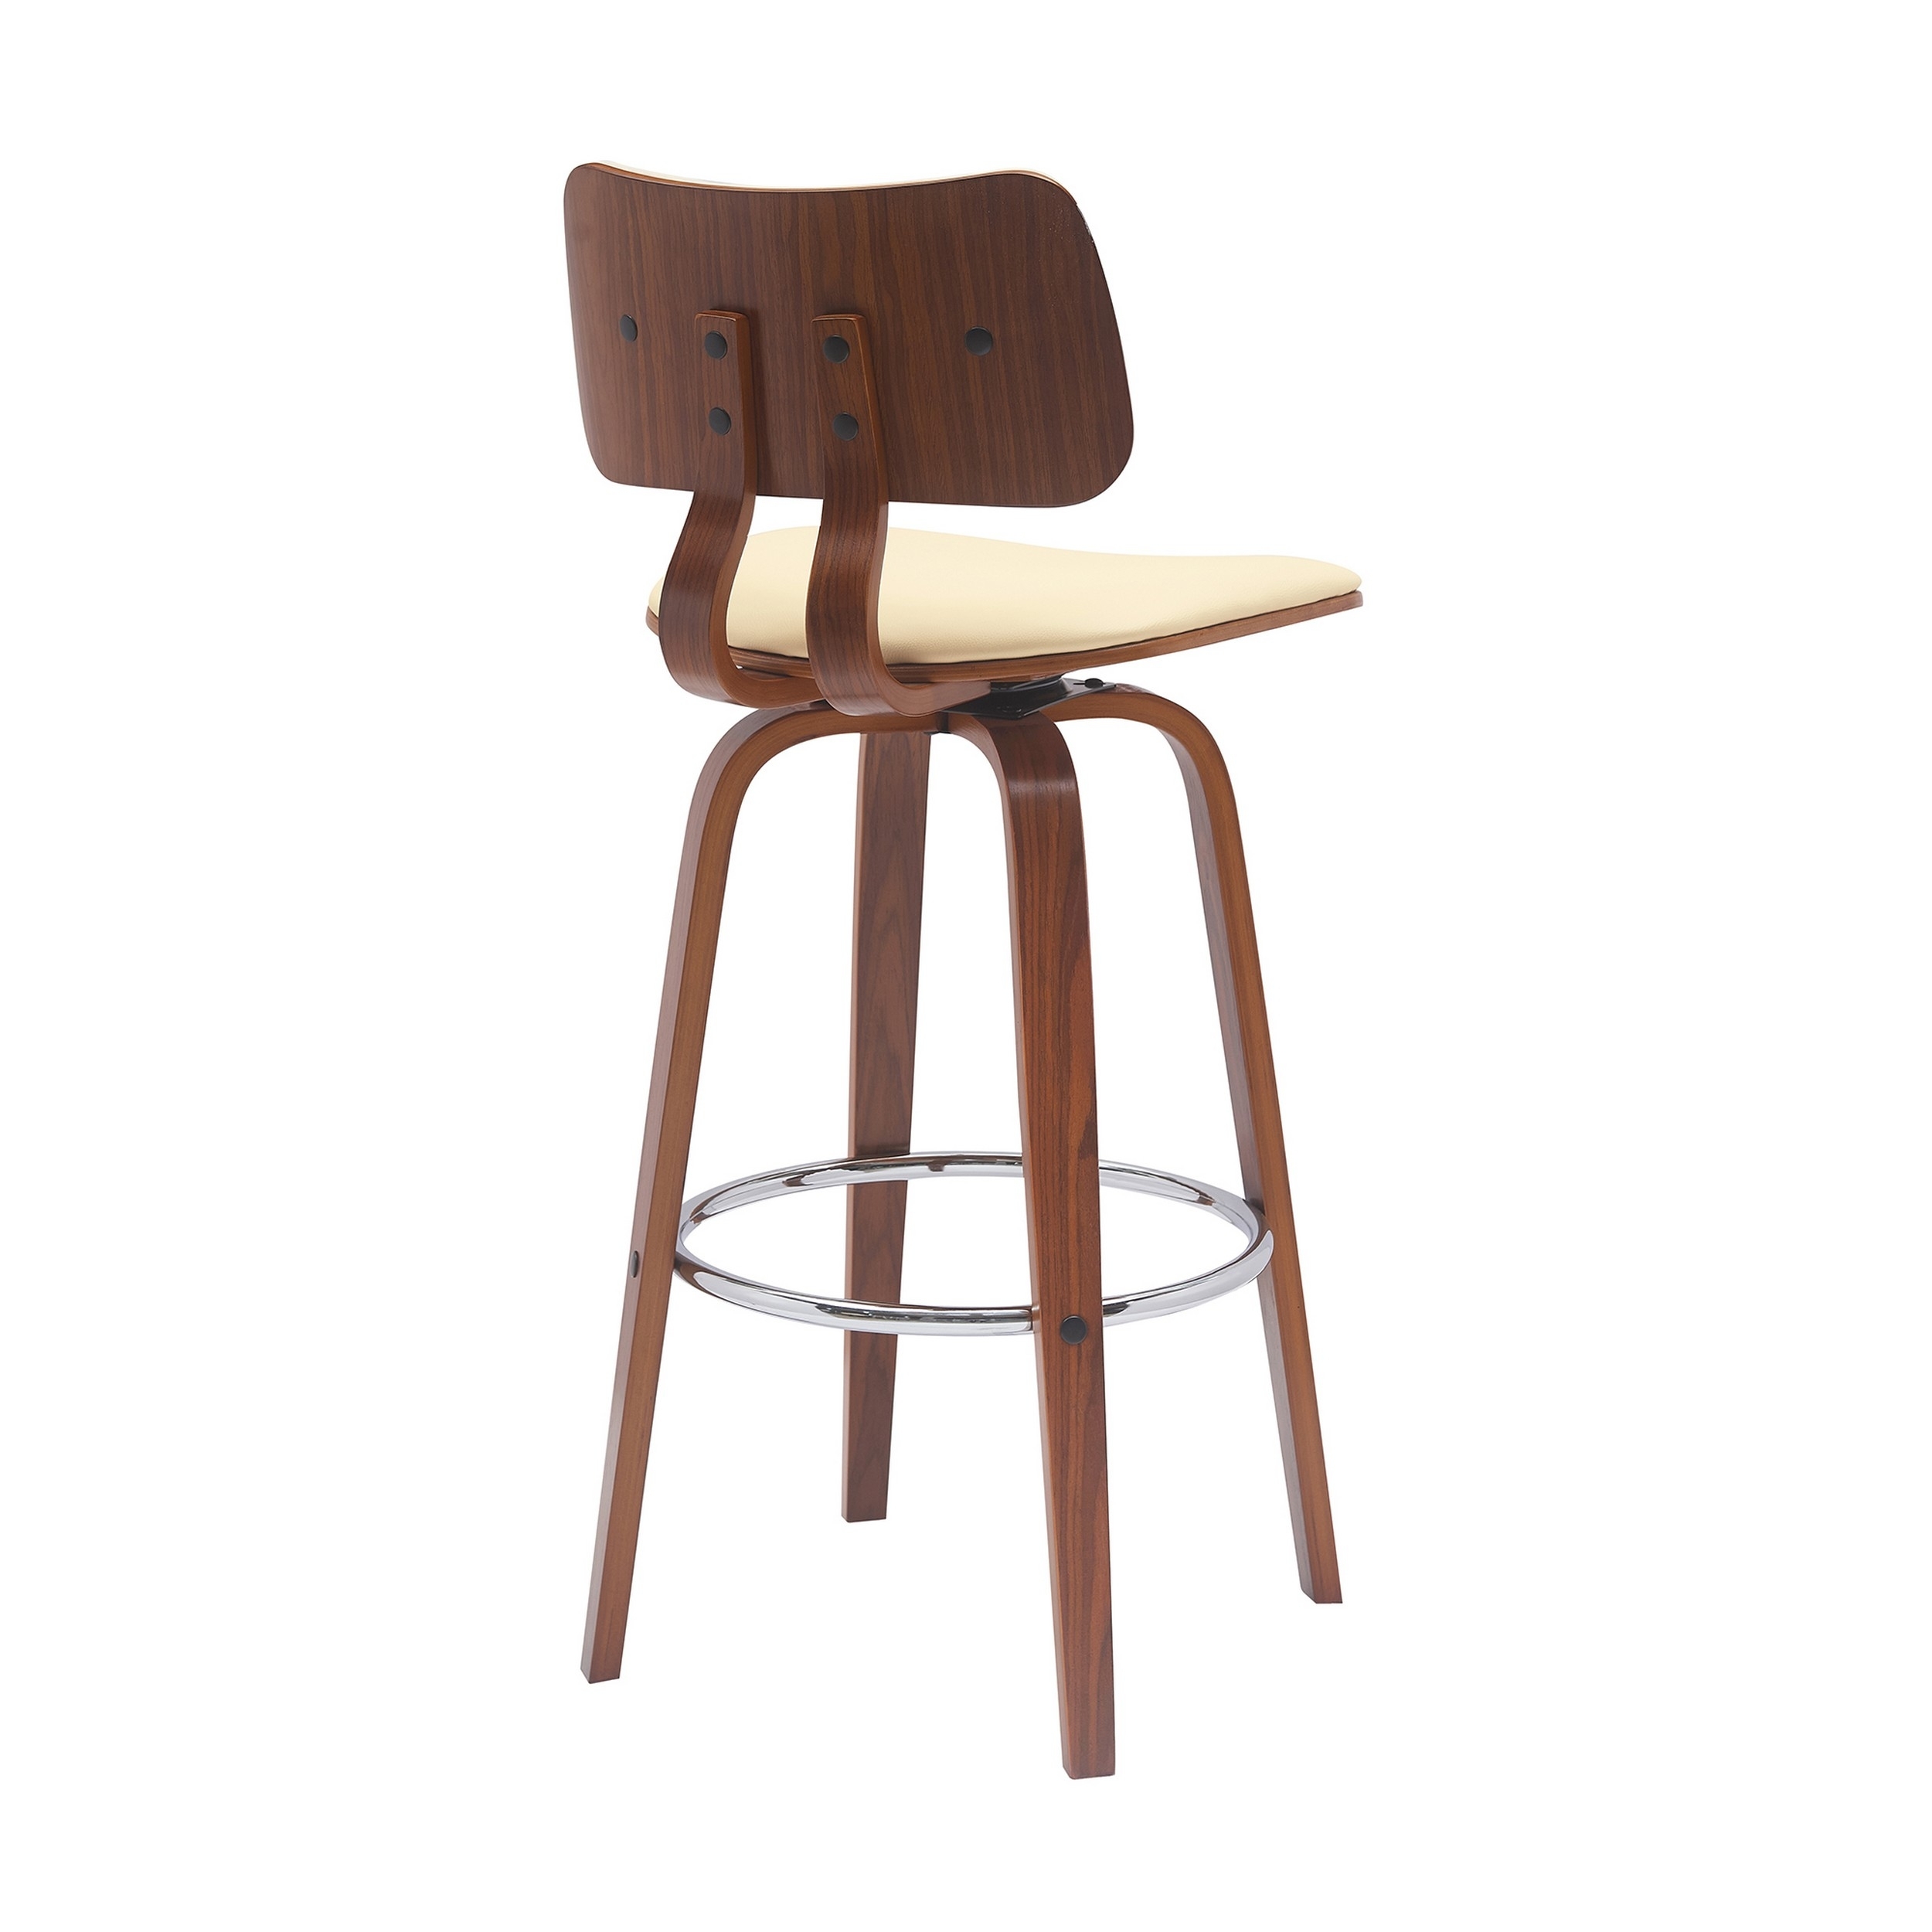 Pino 30 Inch Swivel Barstool Chair, Cream Faux Leather, Walnut Brown Wood - Saltoro Sherpi